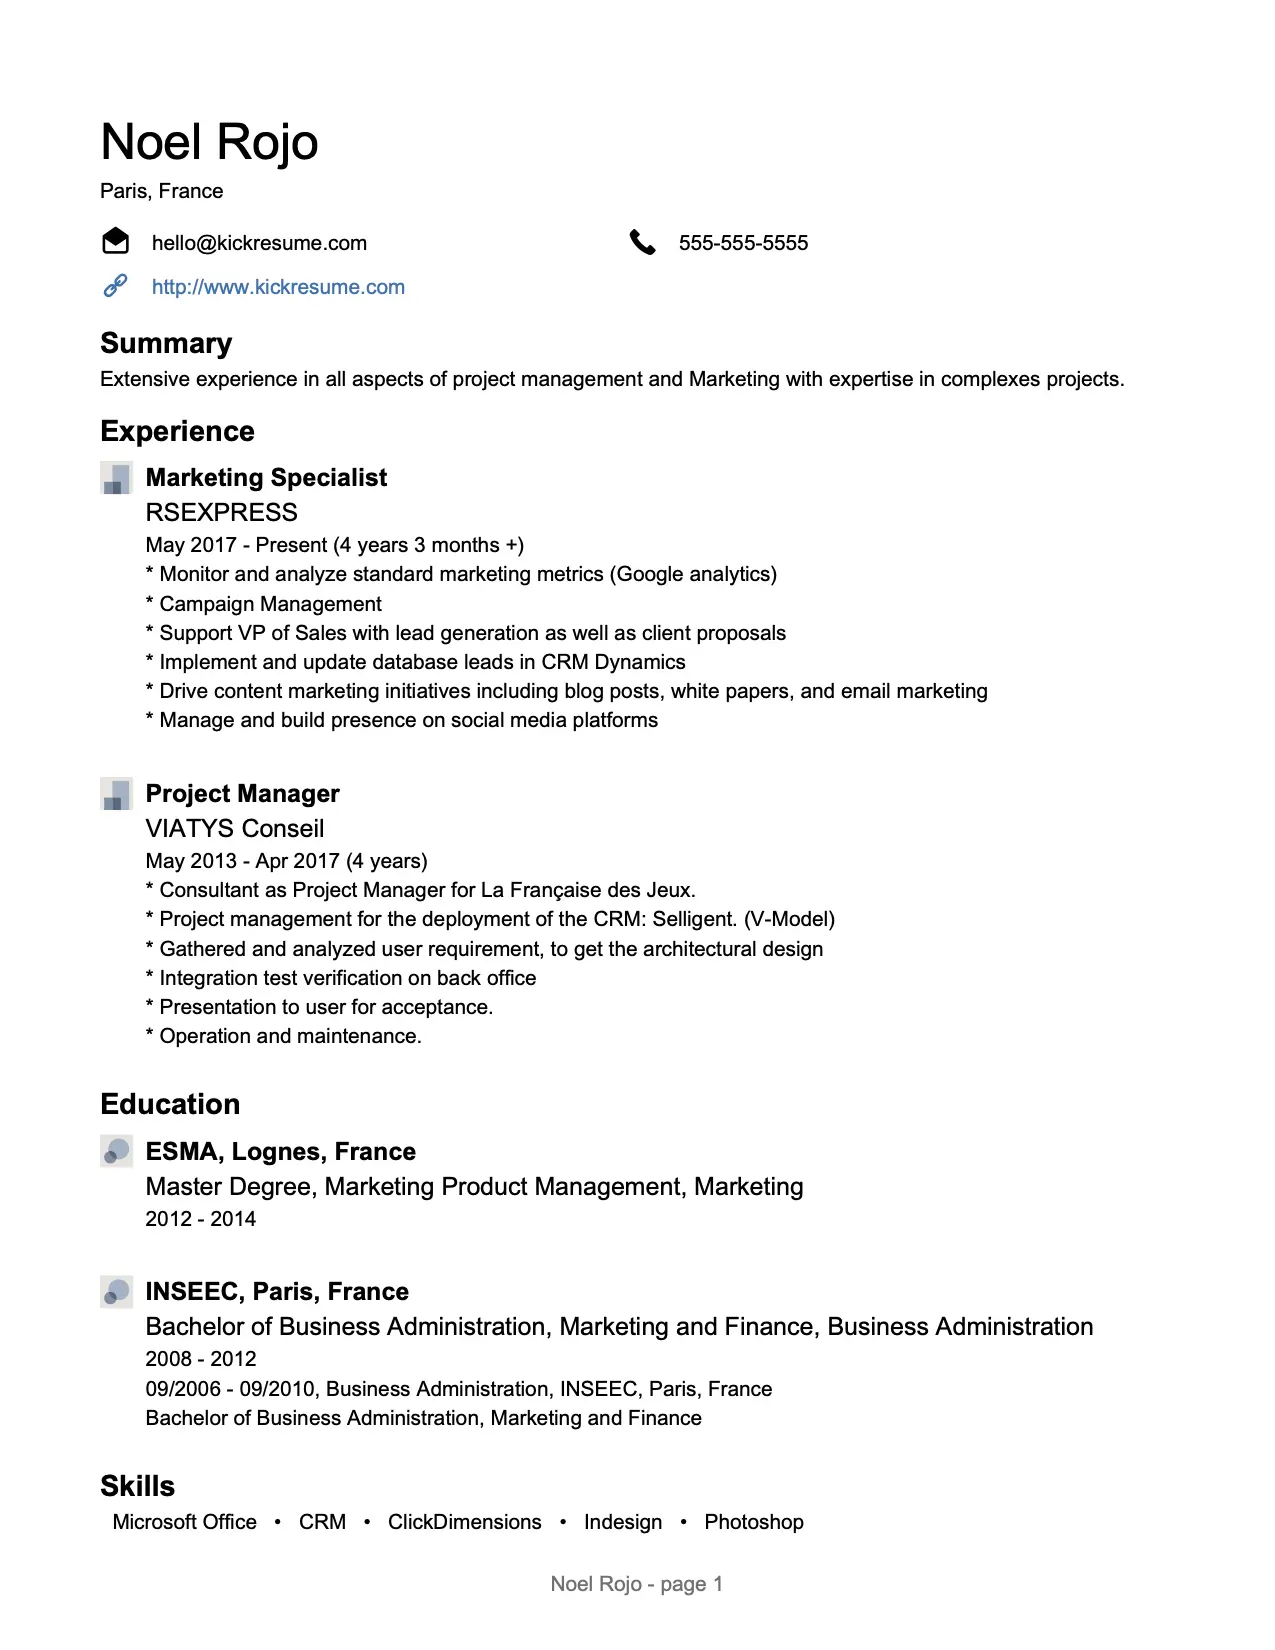 linkedin resume review